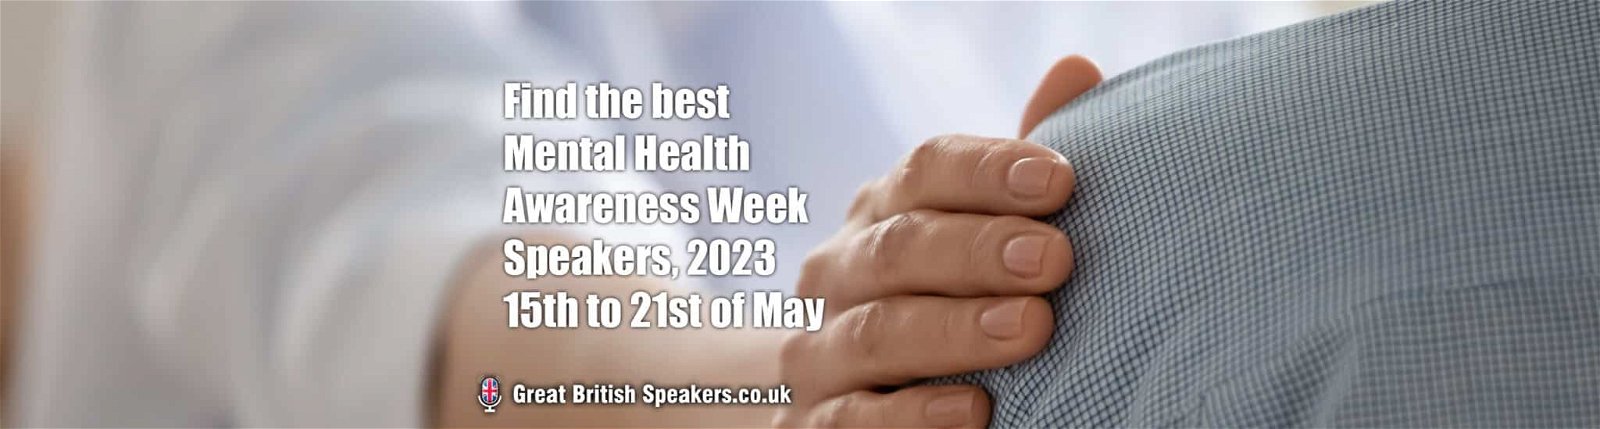 Find the best Mental Health Speakers | MH Awareness Week